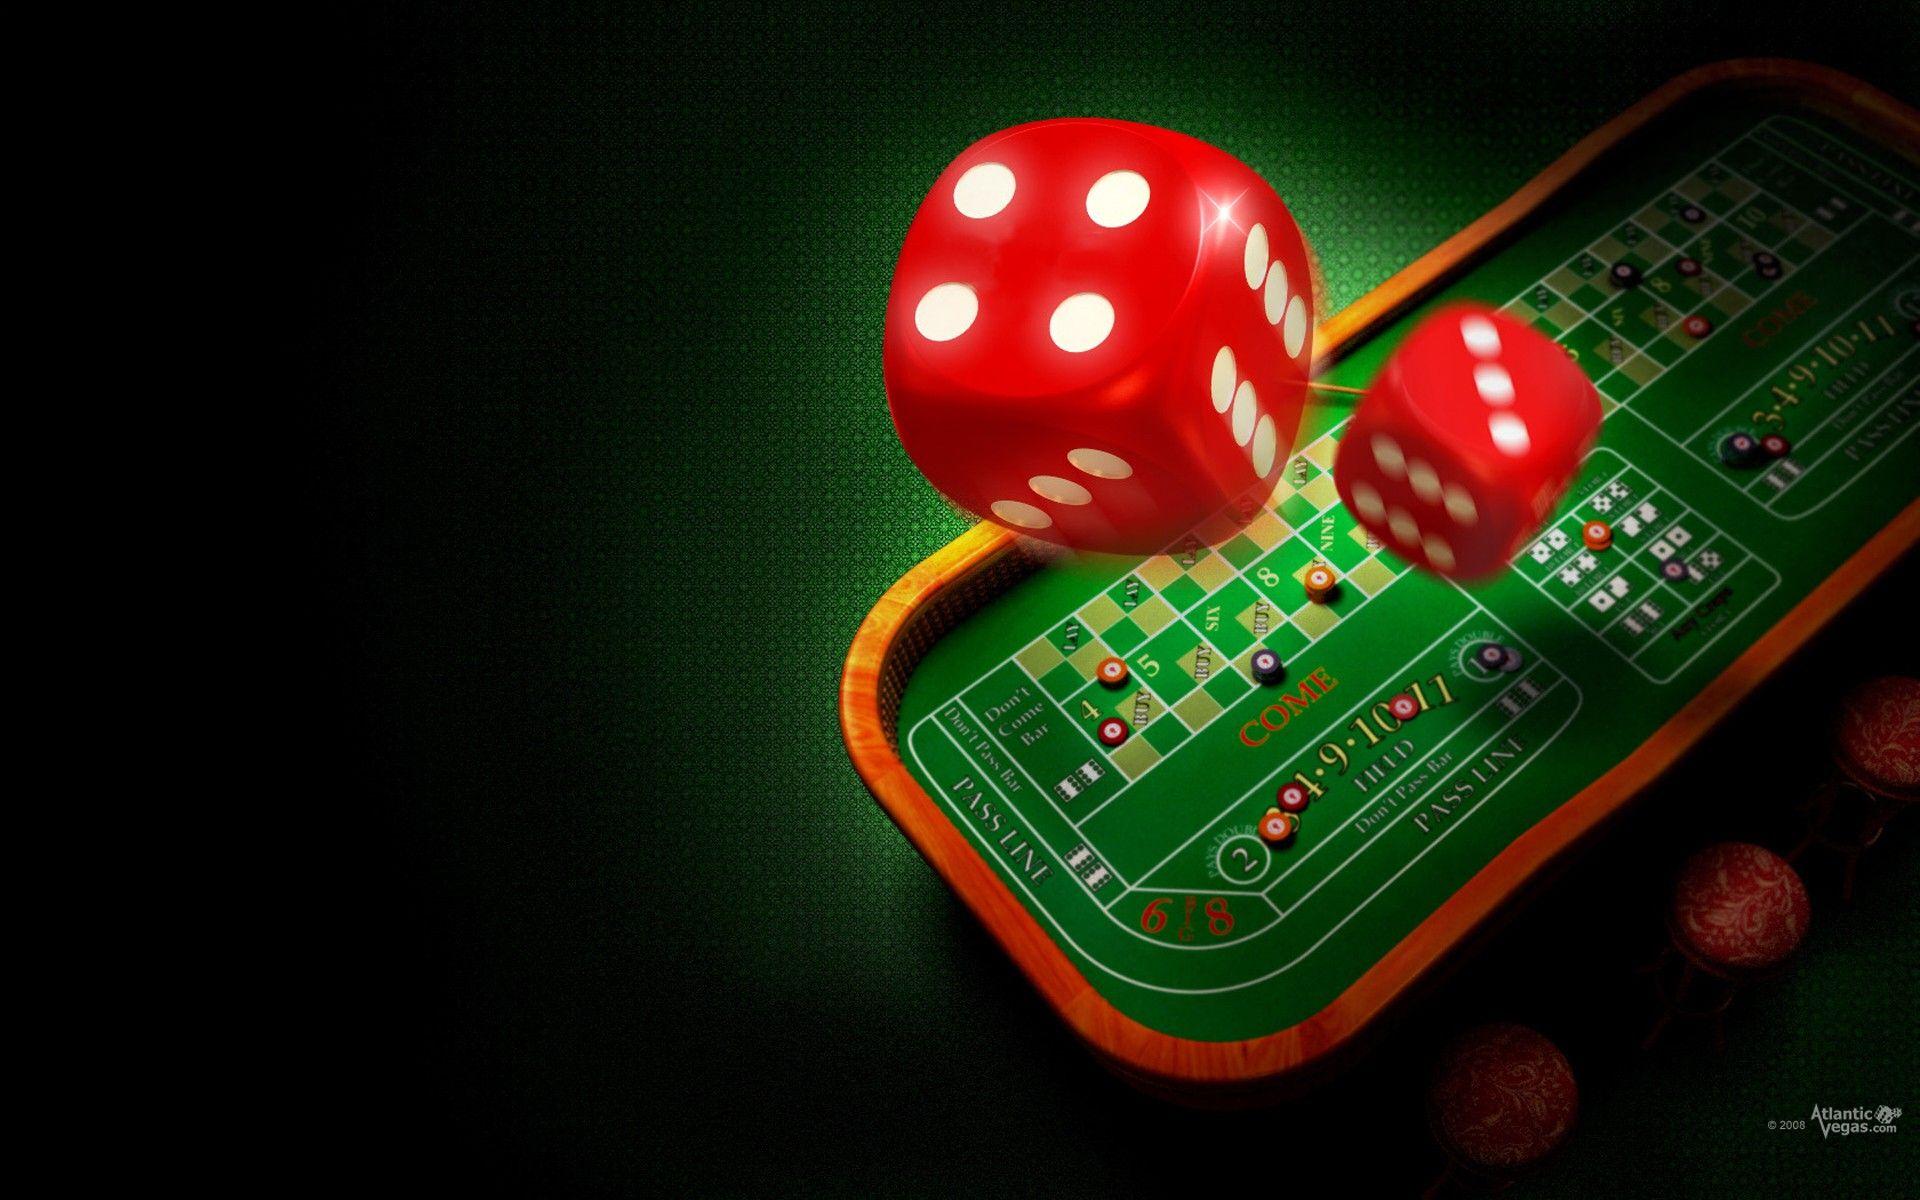 online mobile casino gaming bet